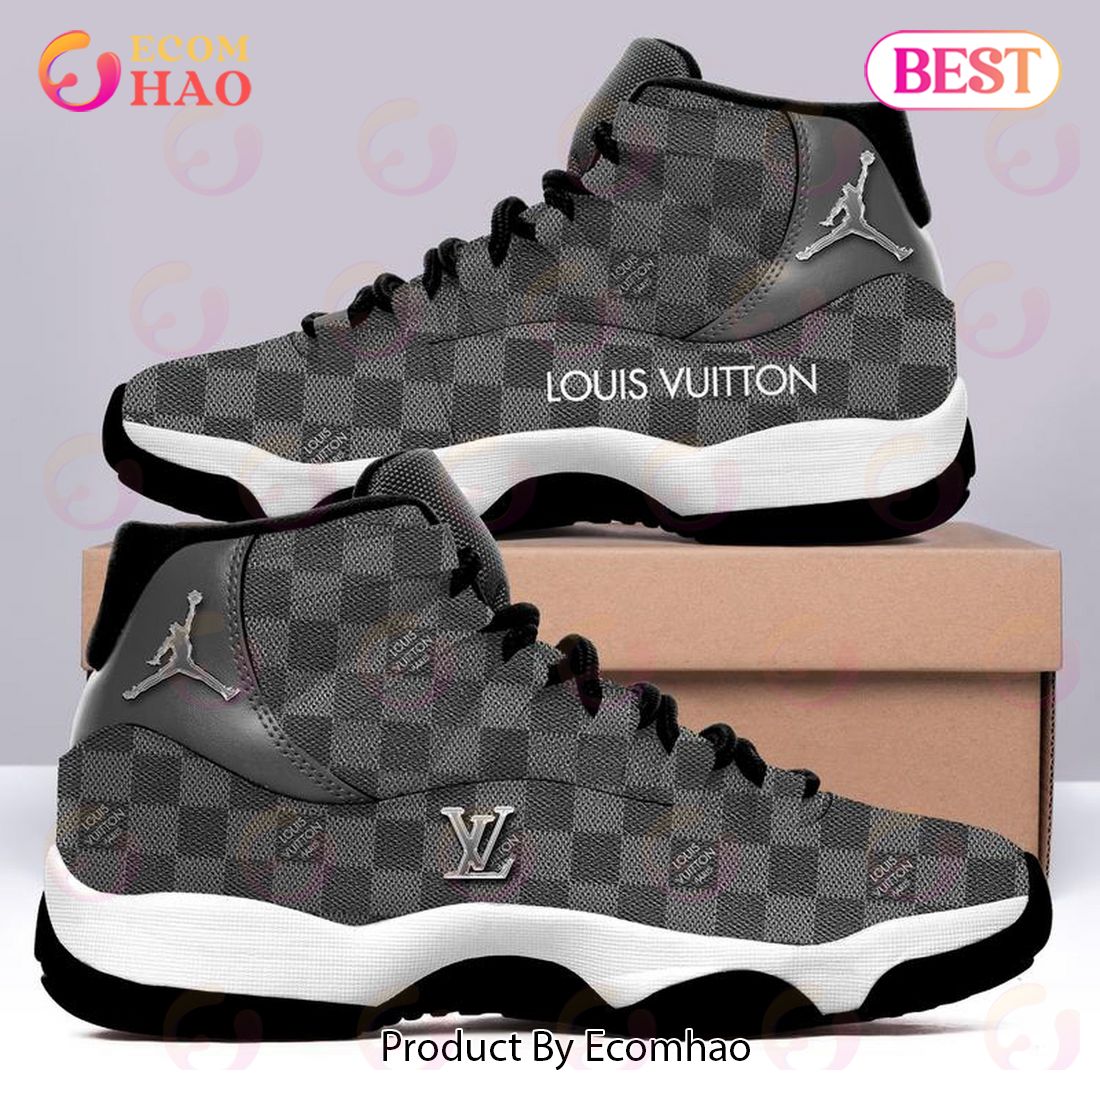 Louis Vuitton Monogram Light Grey Air Jordan 11 Shoes For Men Women